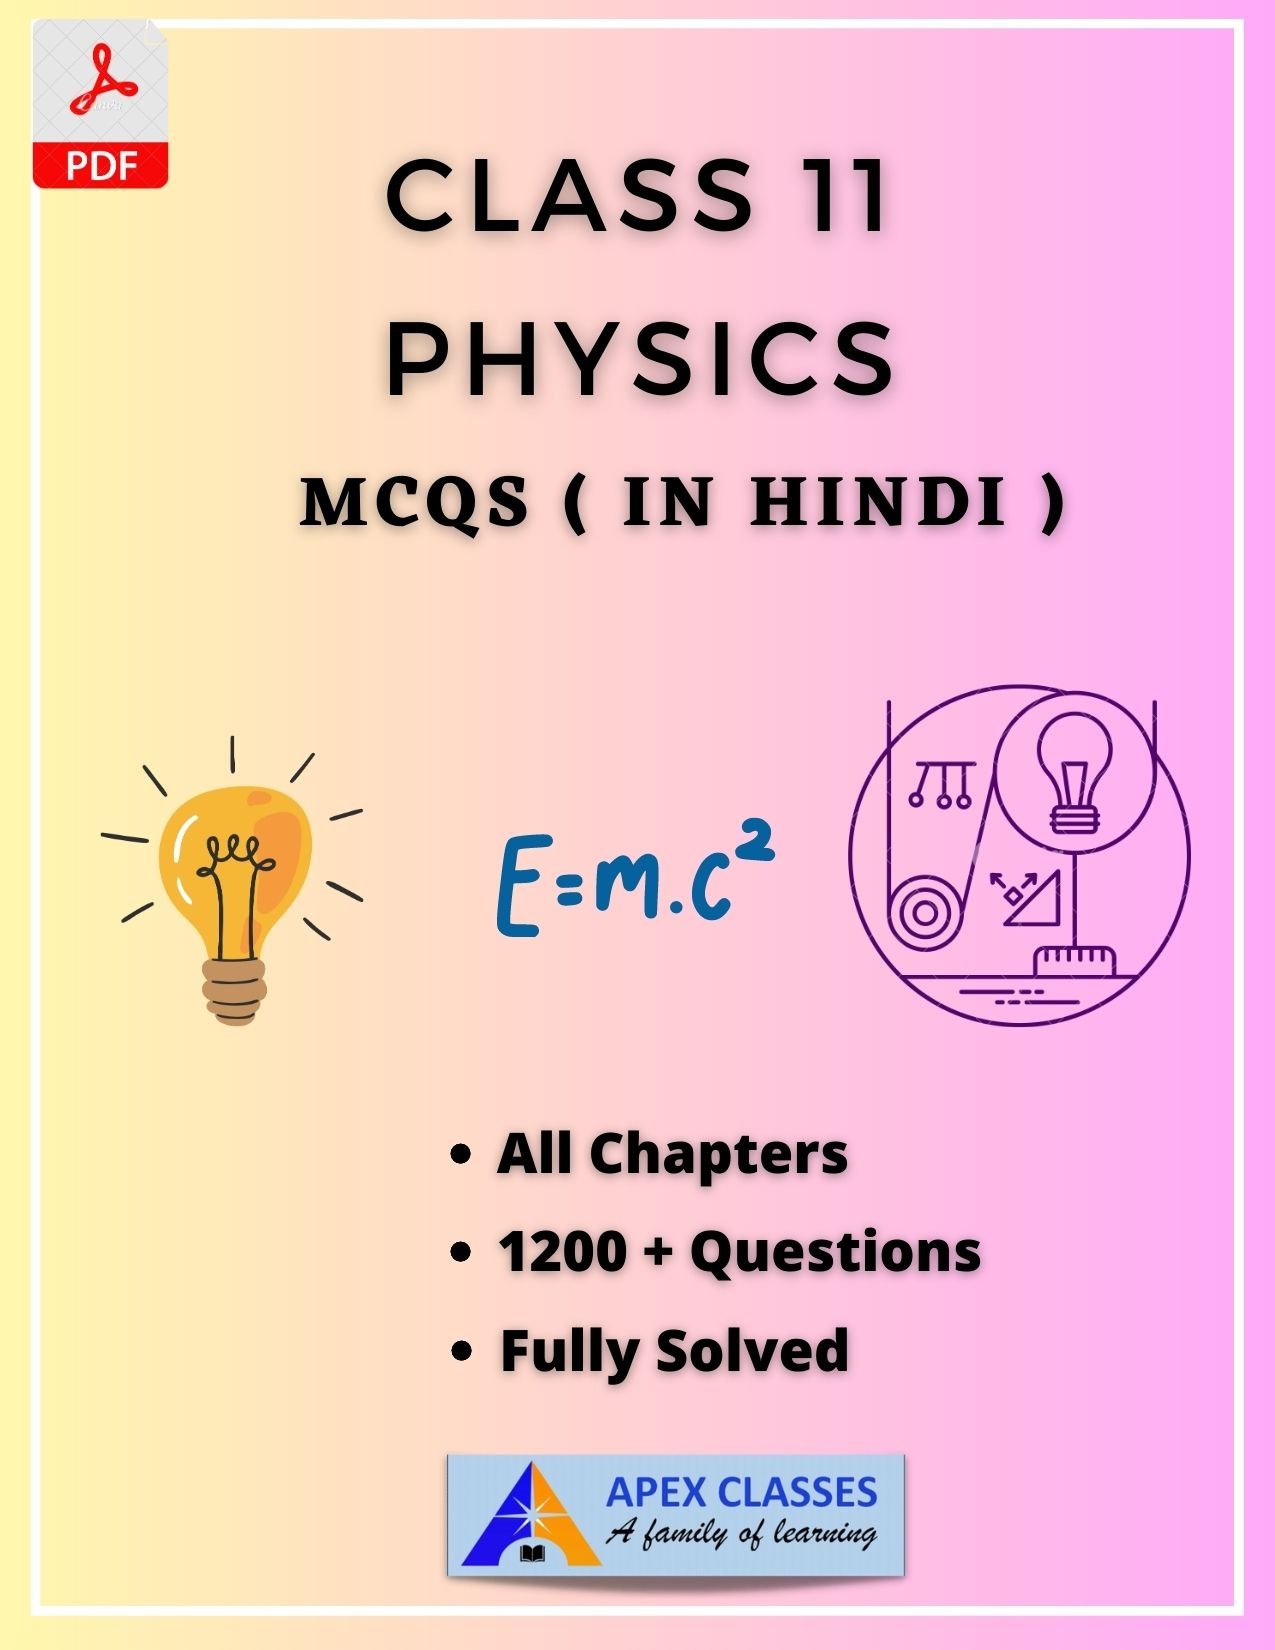 Class 11 Physics MCQs pdf in Hindi